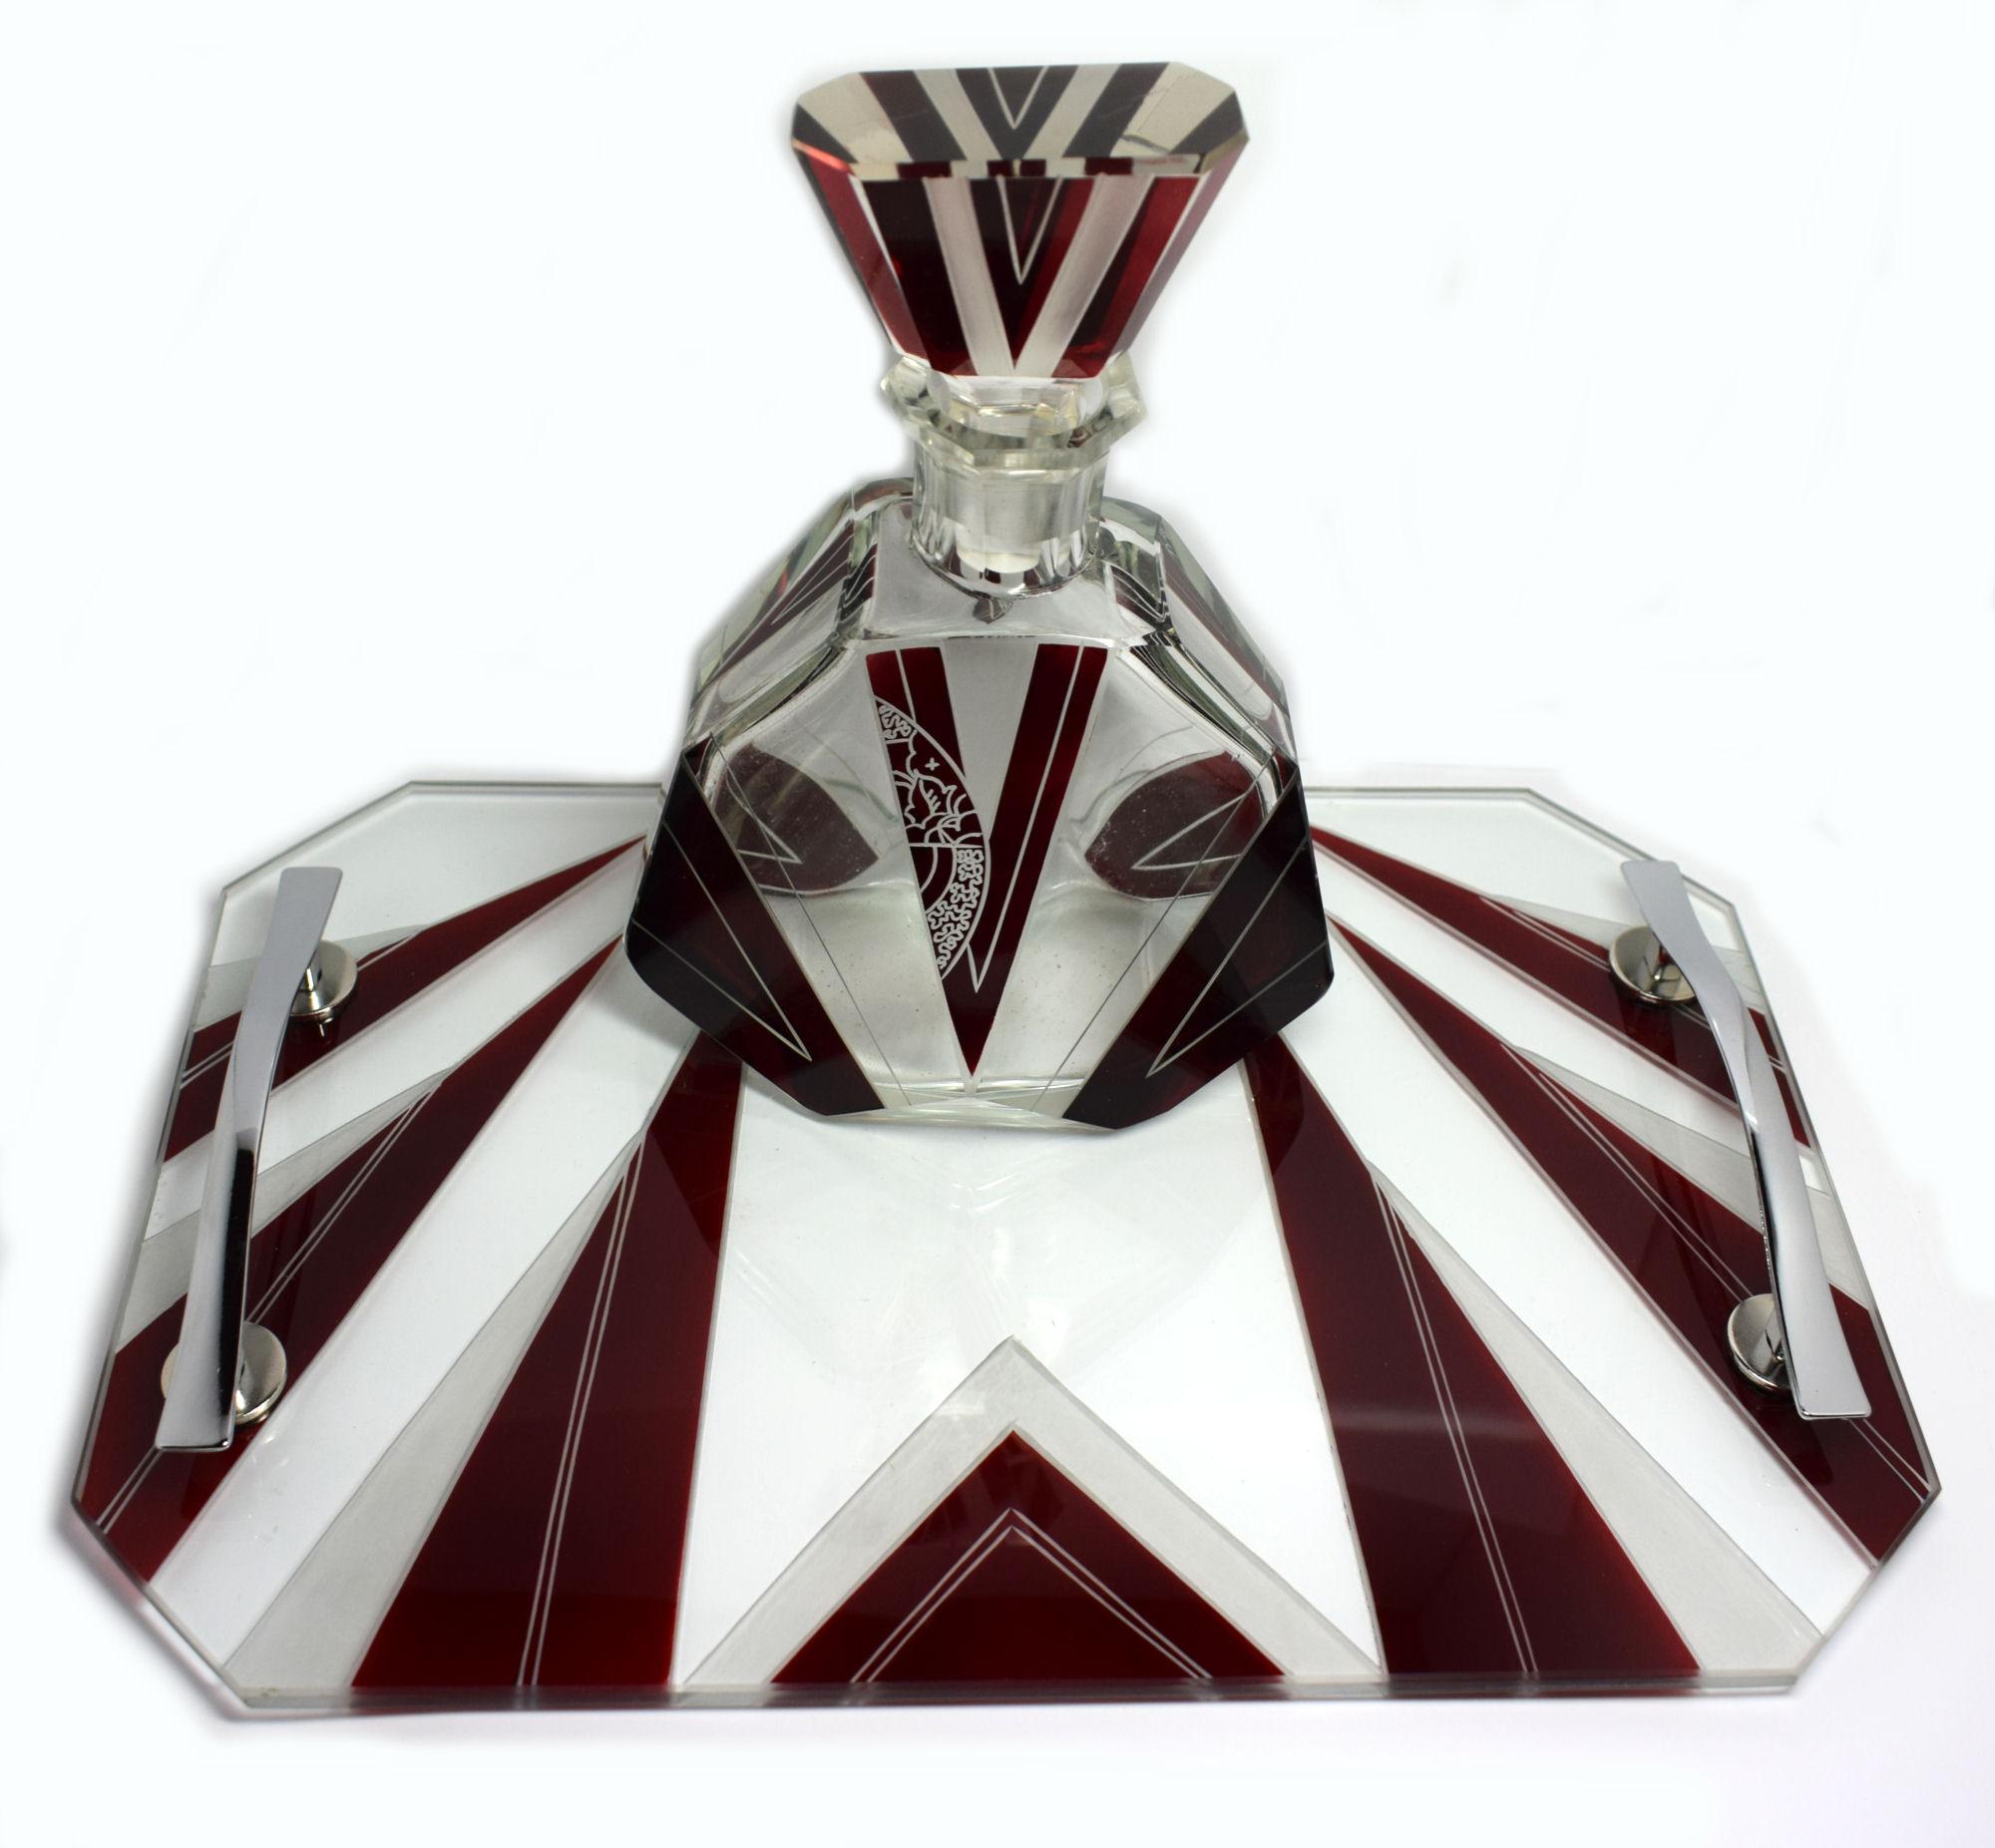 20th Century 1930s Art Deco Czech Glass Decanter Set on Matching Tray